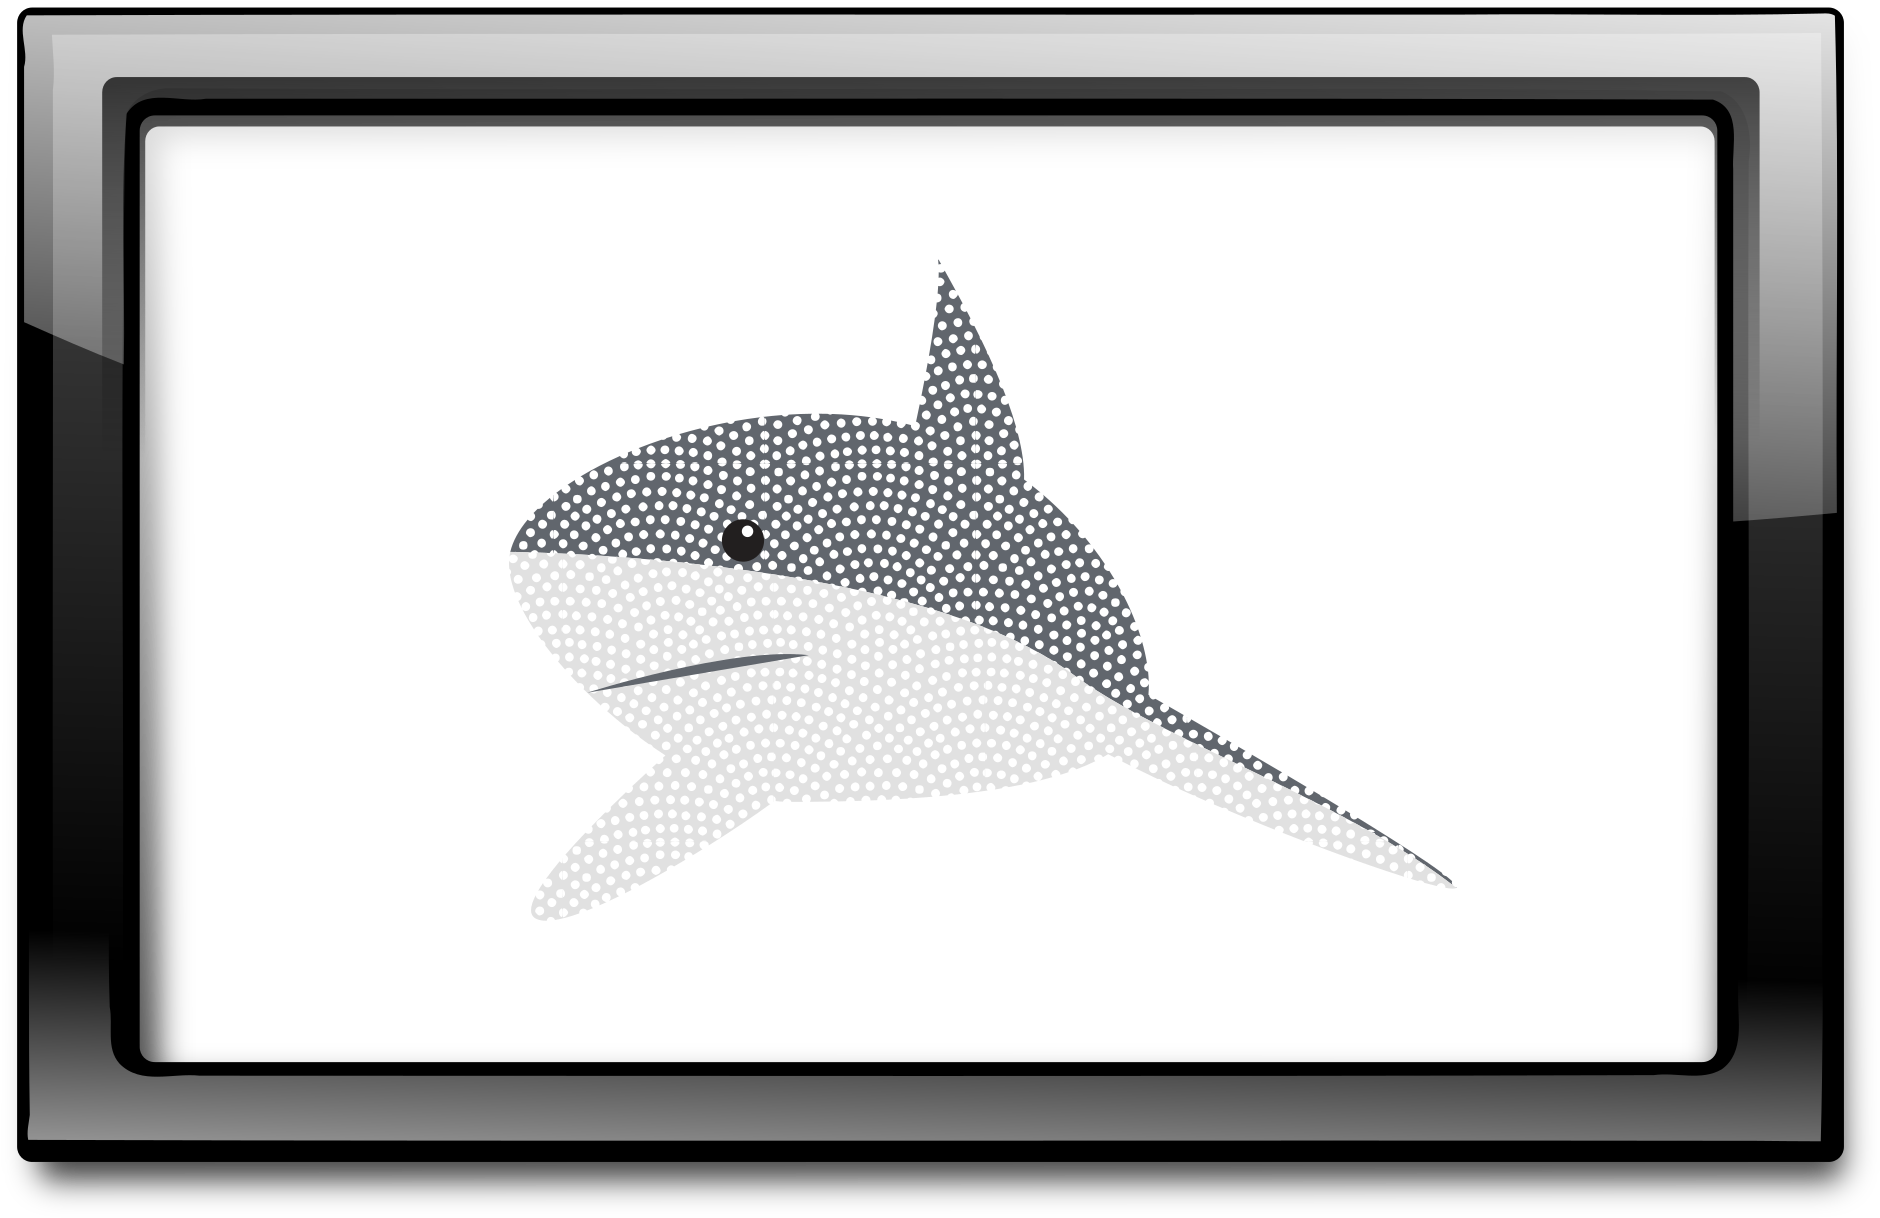 In Frame - Whale Shark (2400x1600)